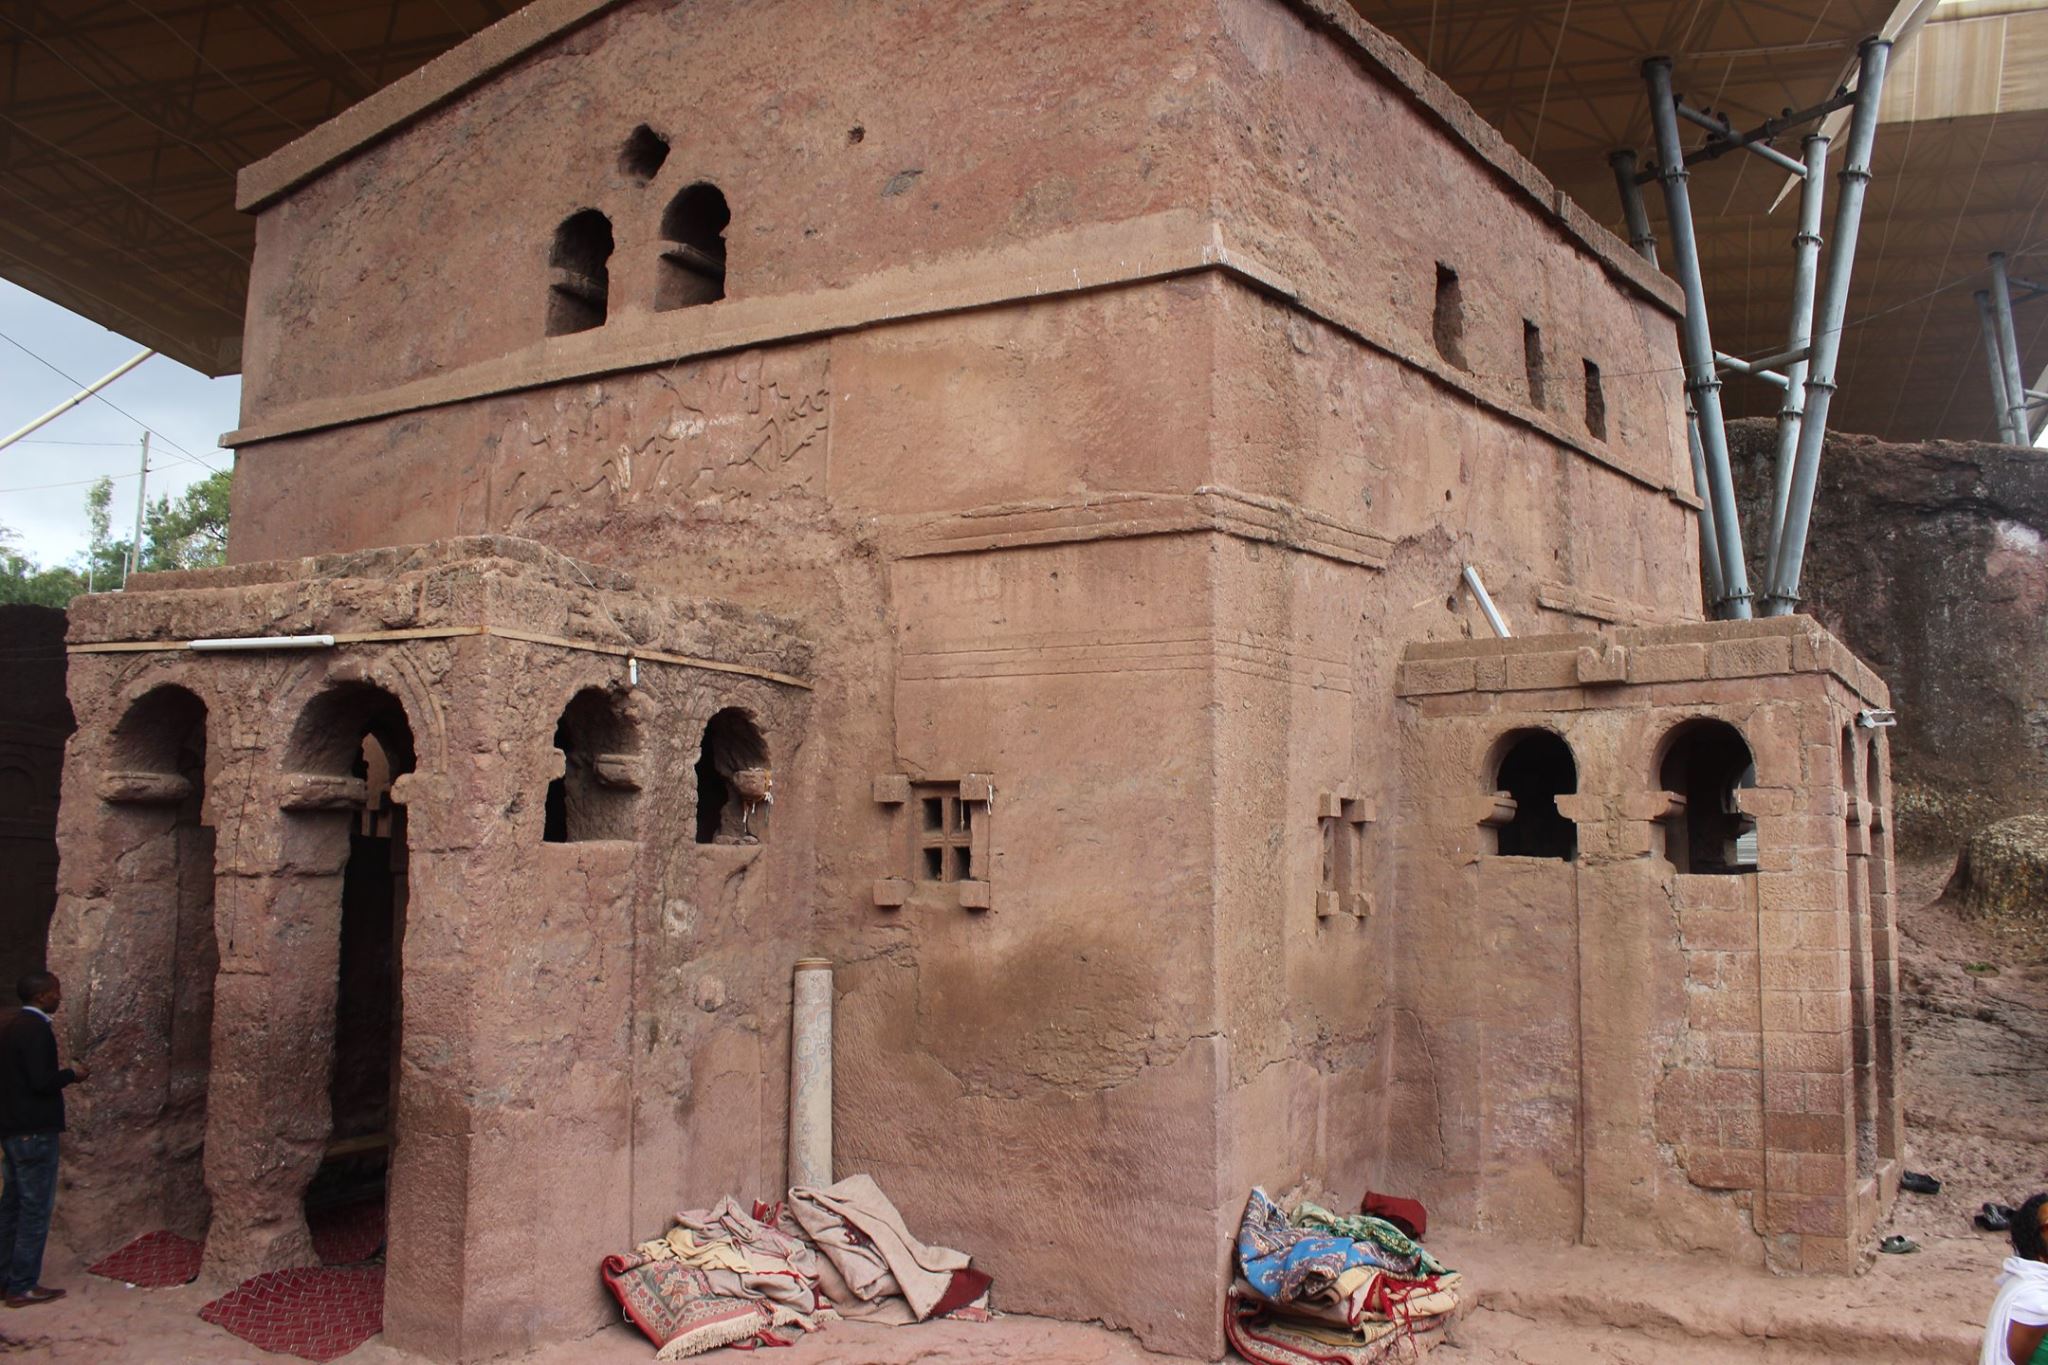 Lalibela Church